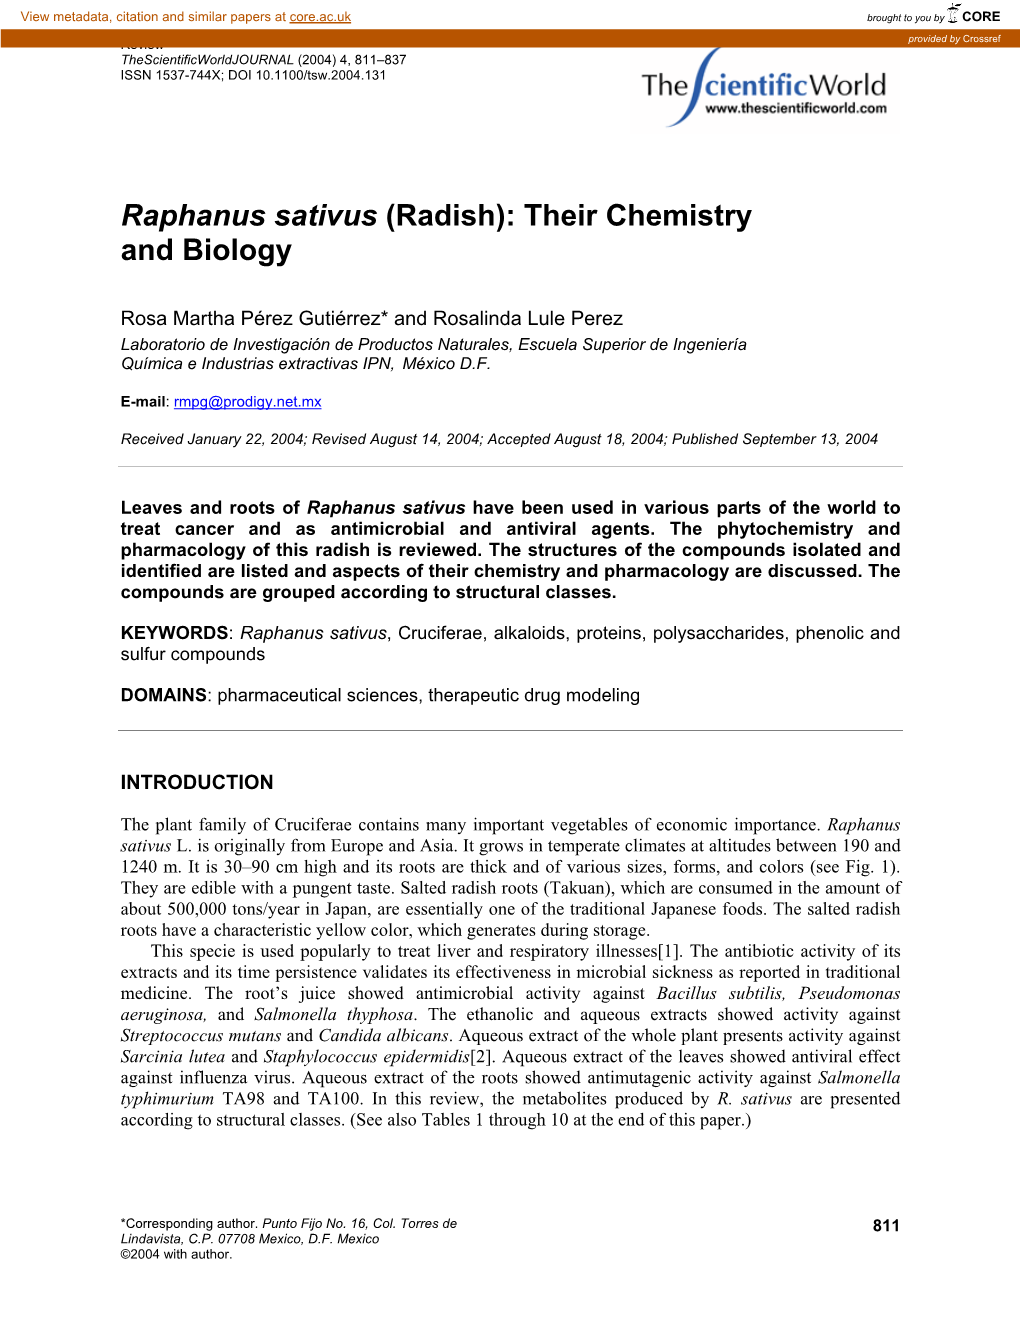 Raphanus Sativus (Radish): Their Chemistry and Biology